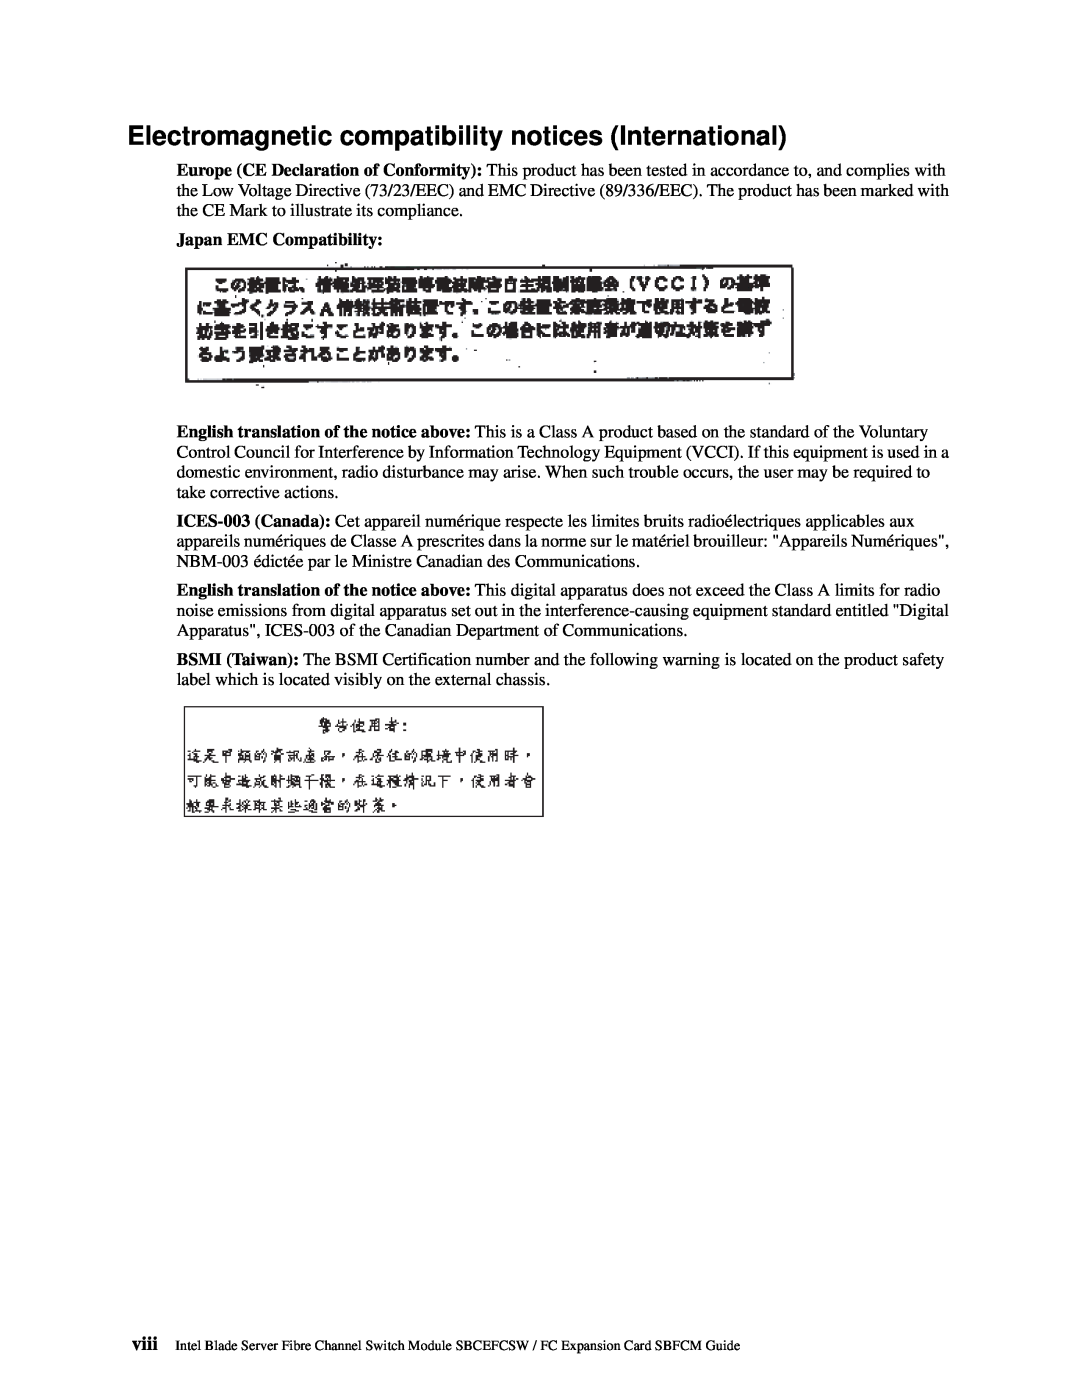 Intel SBFCM, SBCEFCSW manual Japan EMC Compatibility 